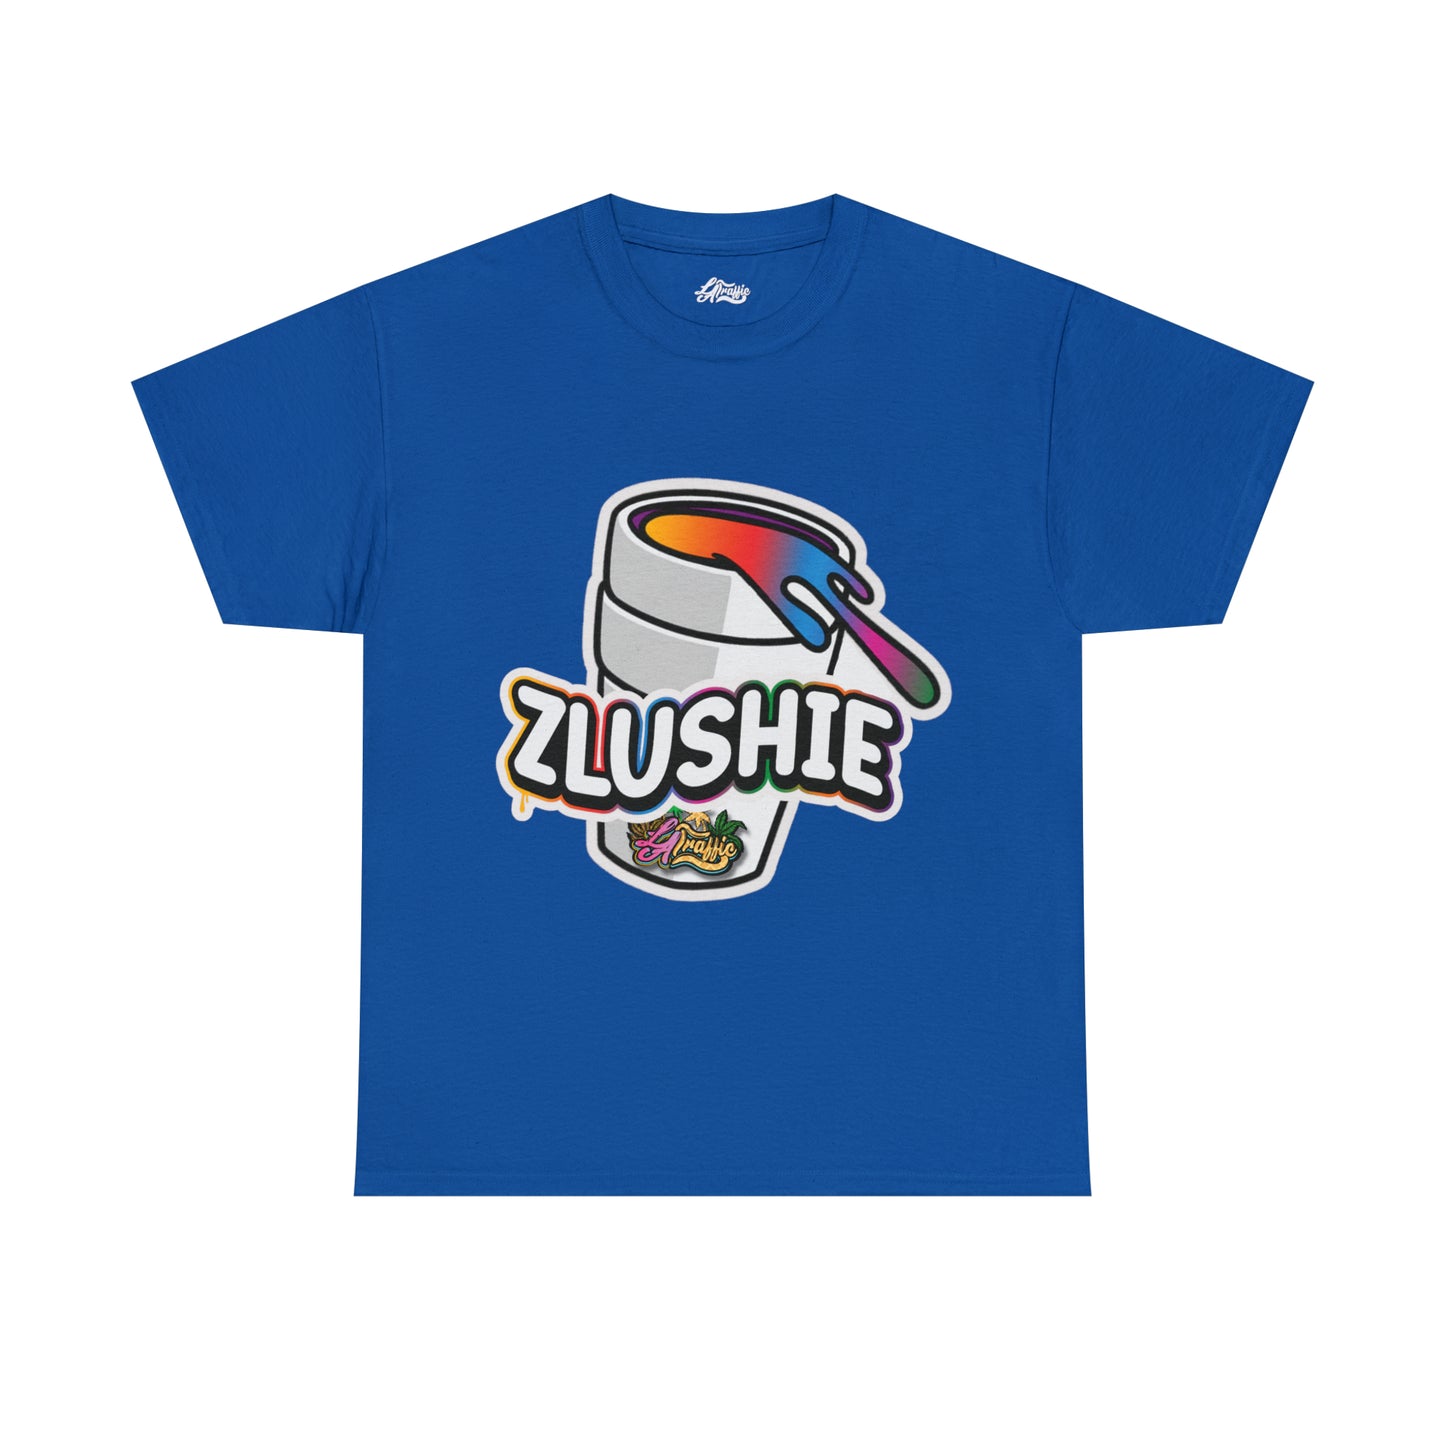 Zlushie Cup T-Shirt